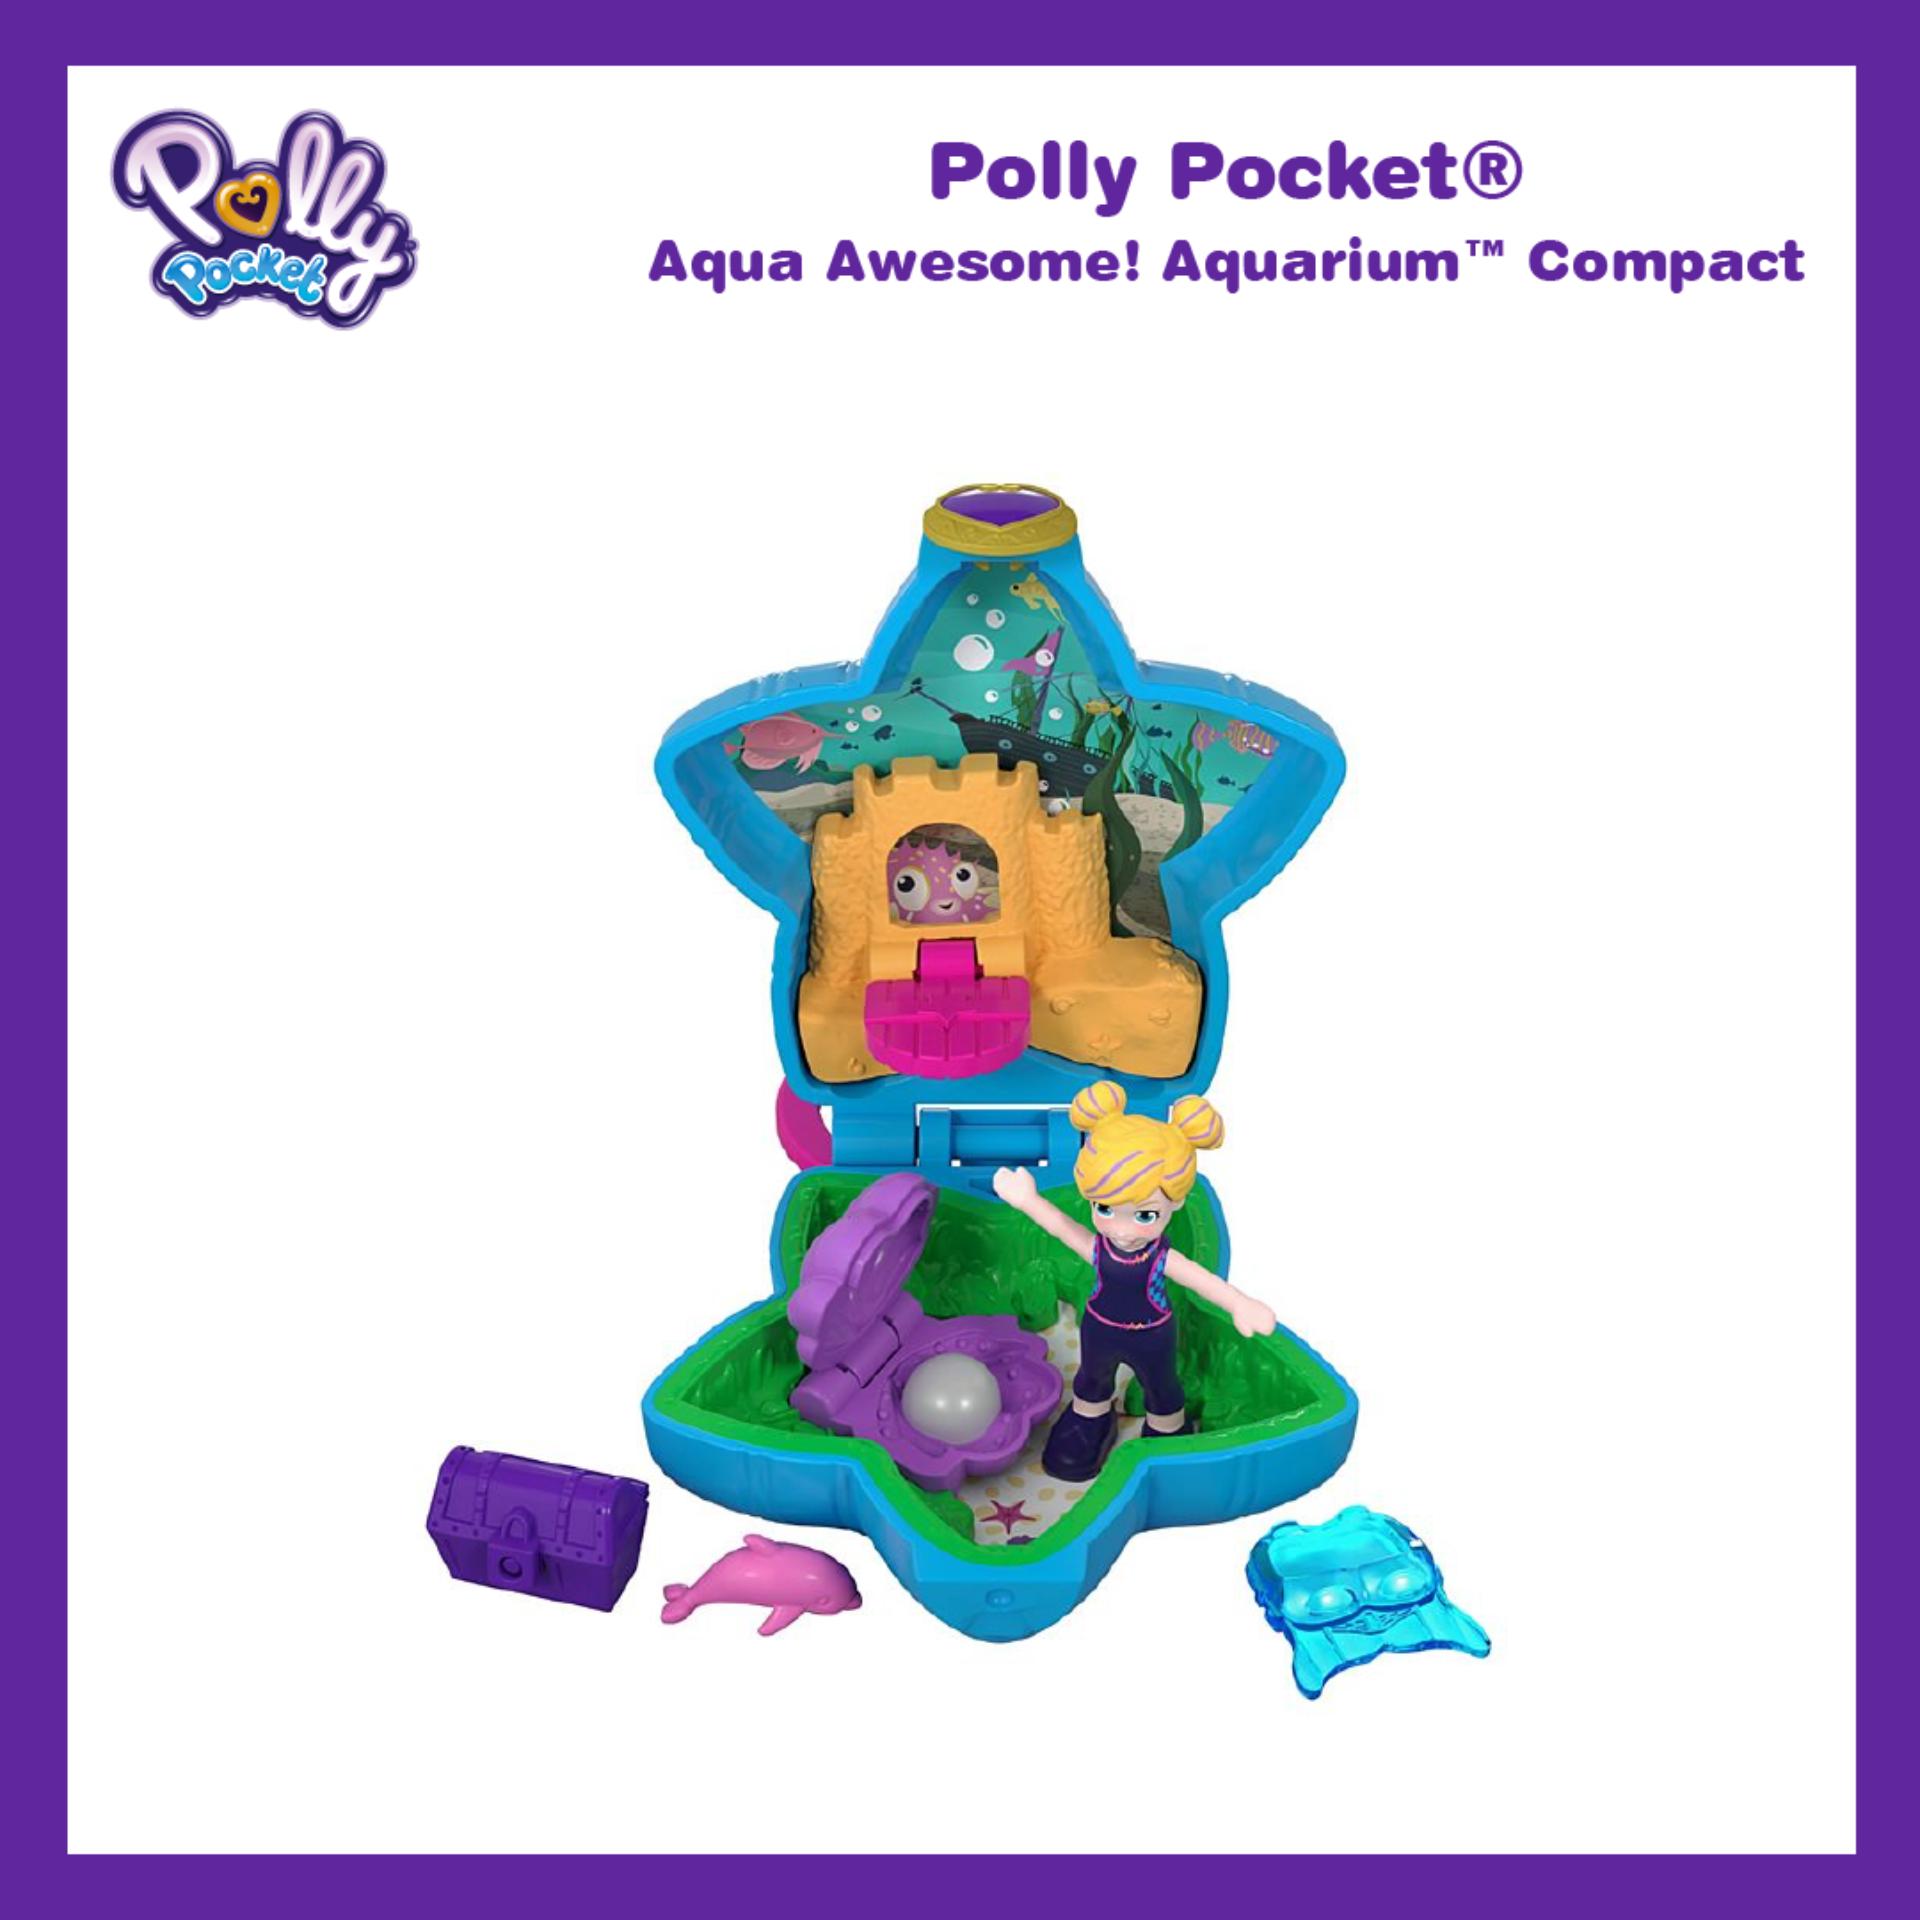 Polly Pocket™ Aqua Awesome! Aquarium™ Compact ตุ๊กตา พอลลี่ พ็อคเก็ต อะควา ออซั่ม อความเรี่ยม ของเล่นเด็ก ขนาดพกพา